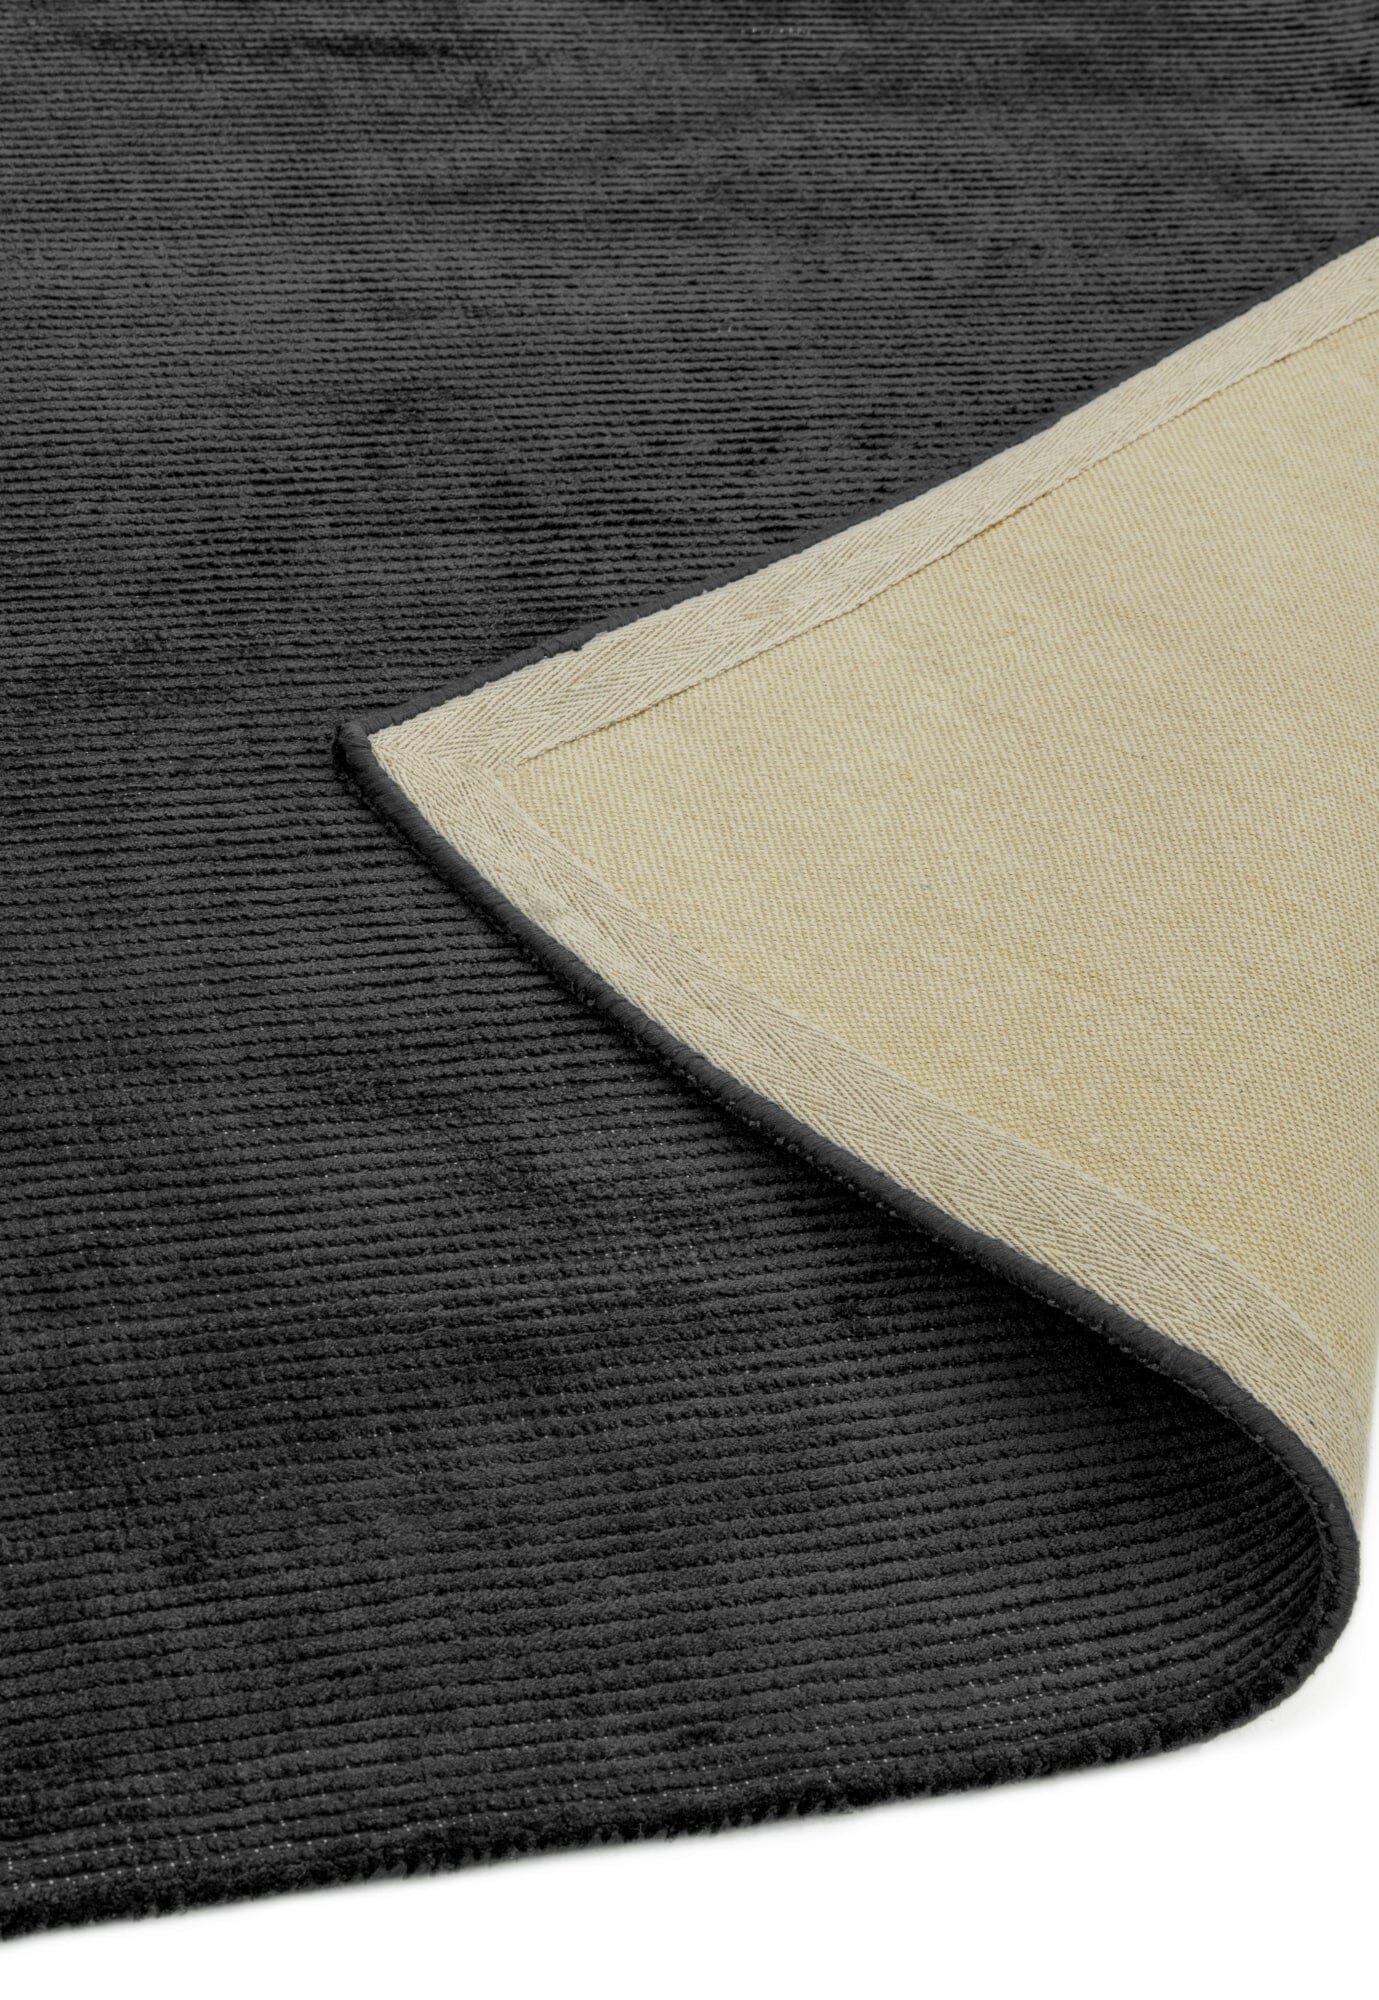 Asiatic Carpets Reko Hand Woven Rug Charcoal - 160 x 230cm